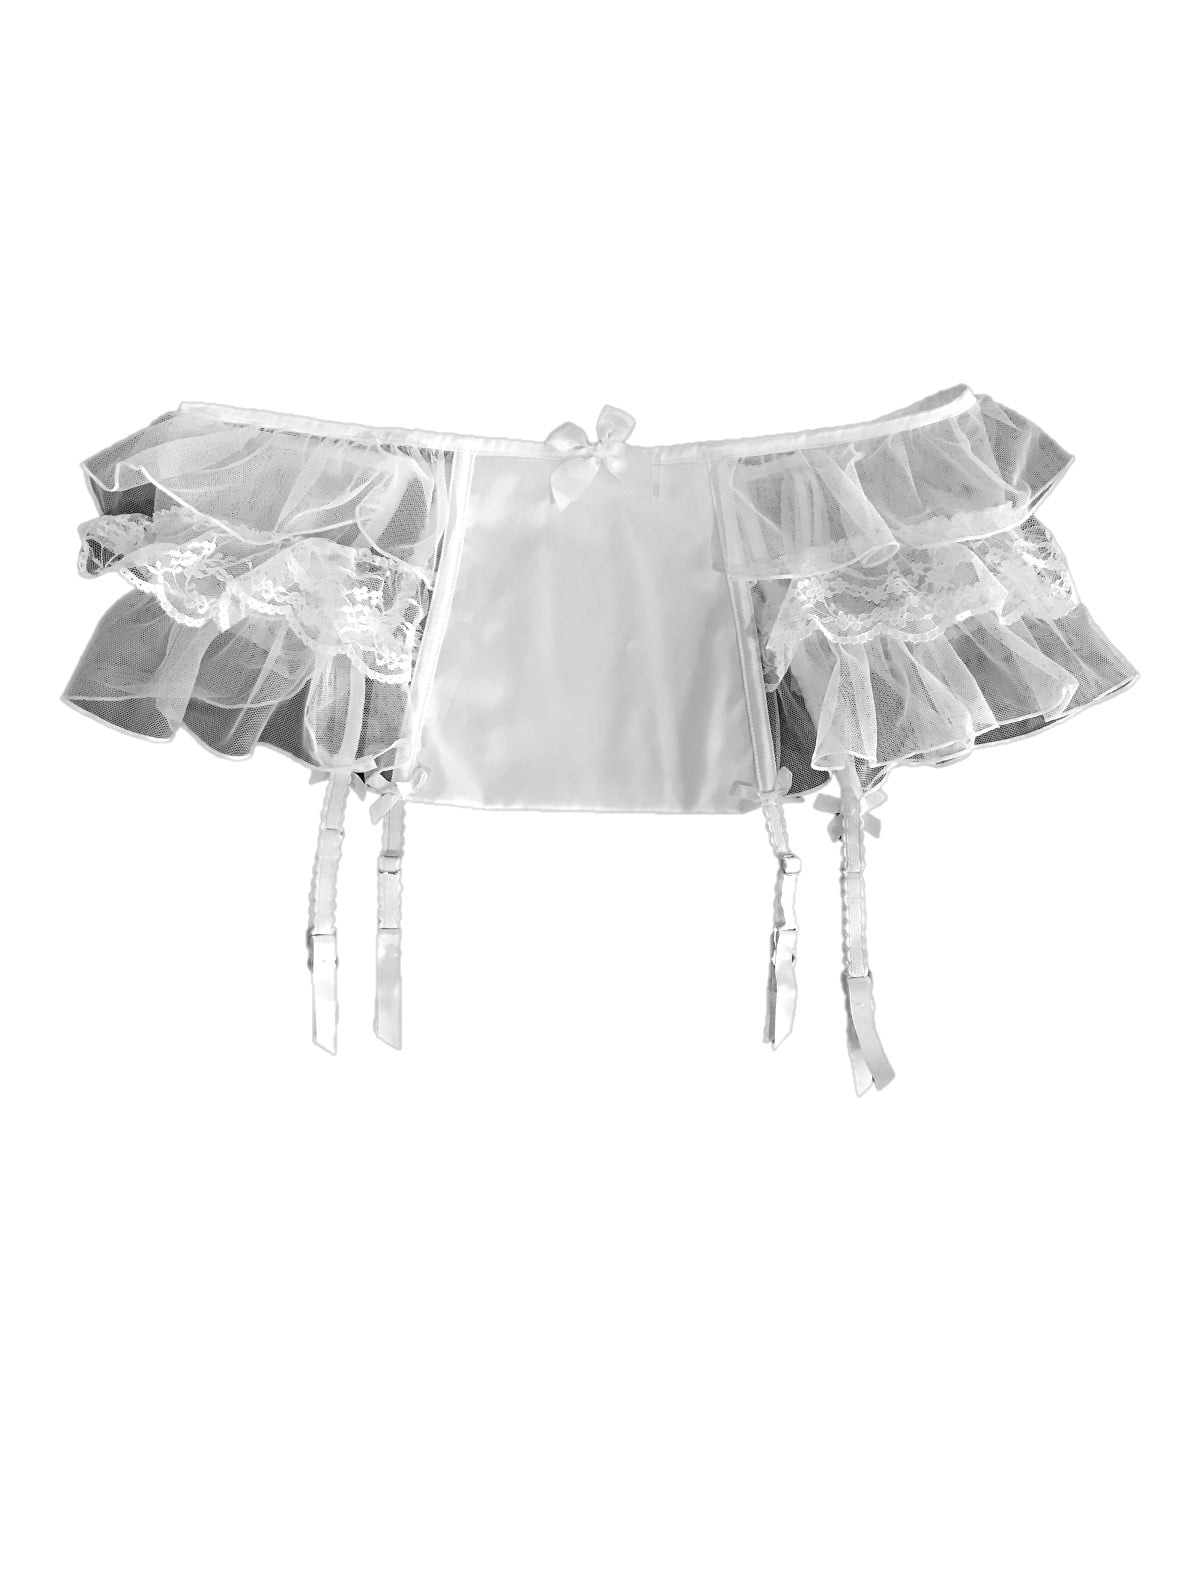 Victoria's Secret longline 32D BRA SET+M garter+S Panty WHITE silver foil  BRIDAL